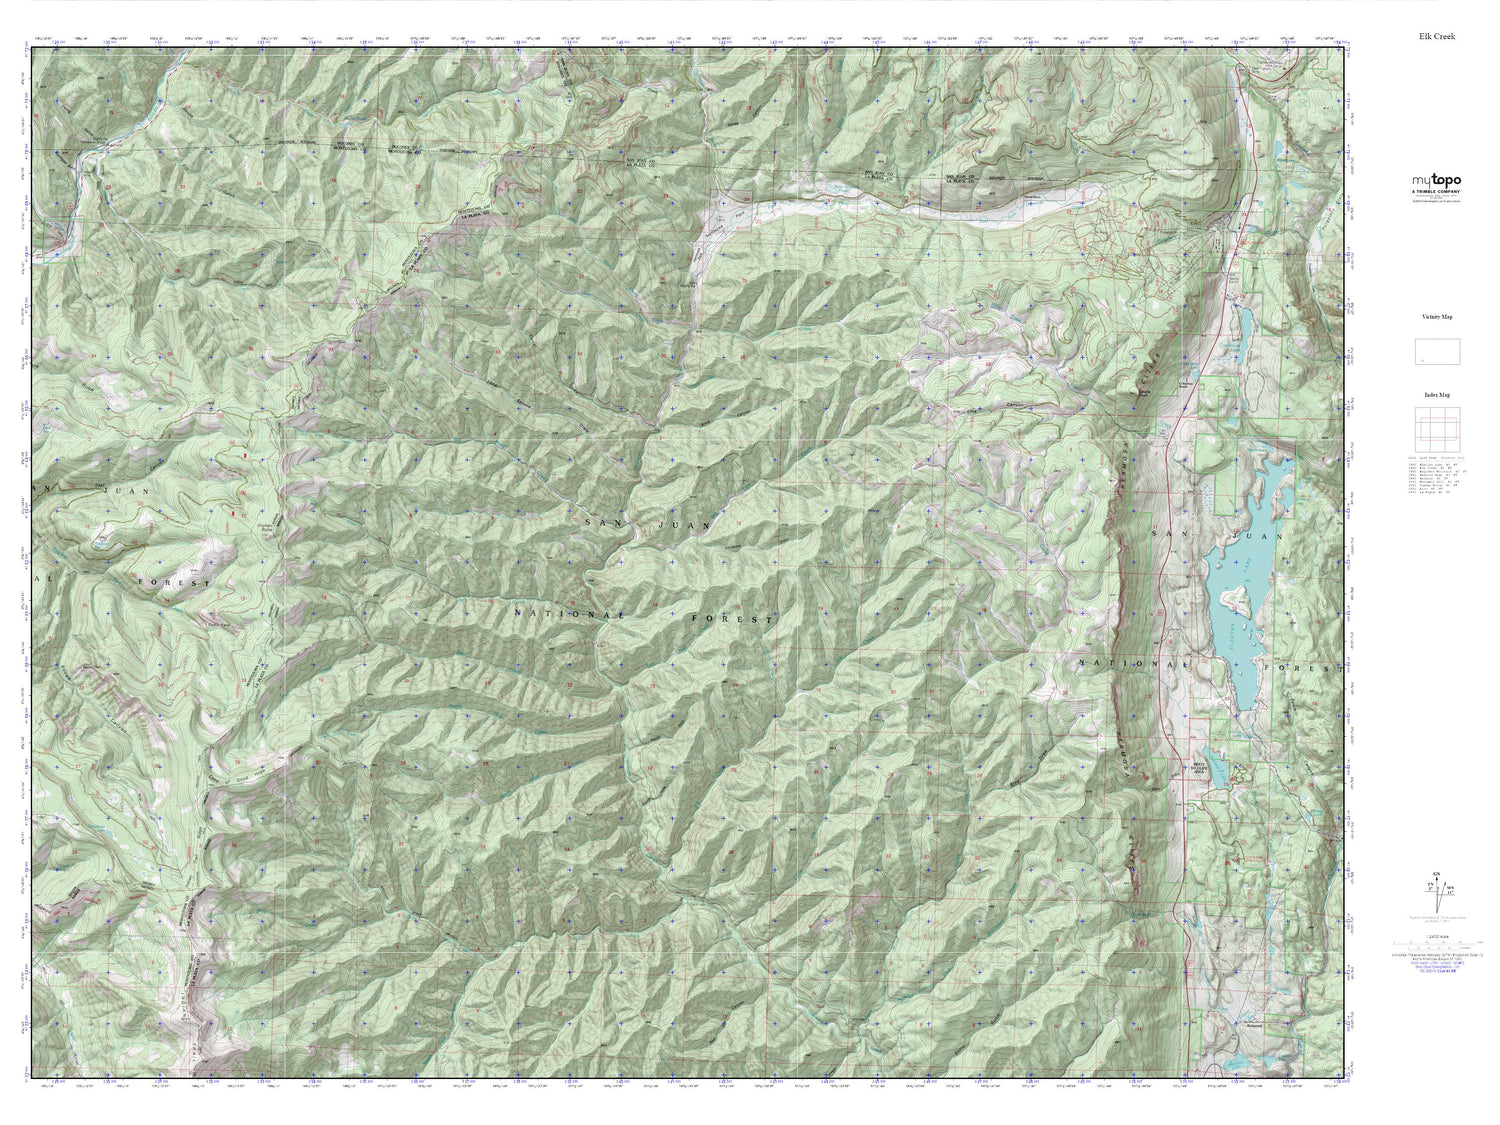 Elk Creek MyTopo Explorer Series Map Image